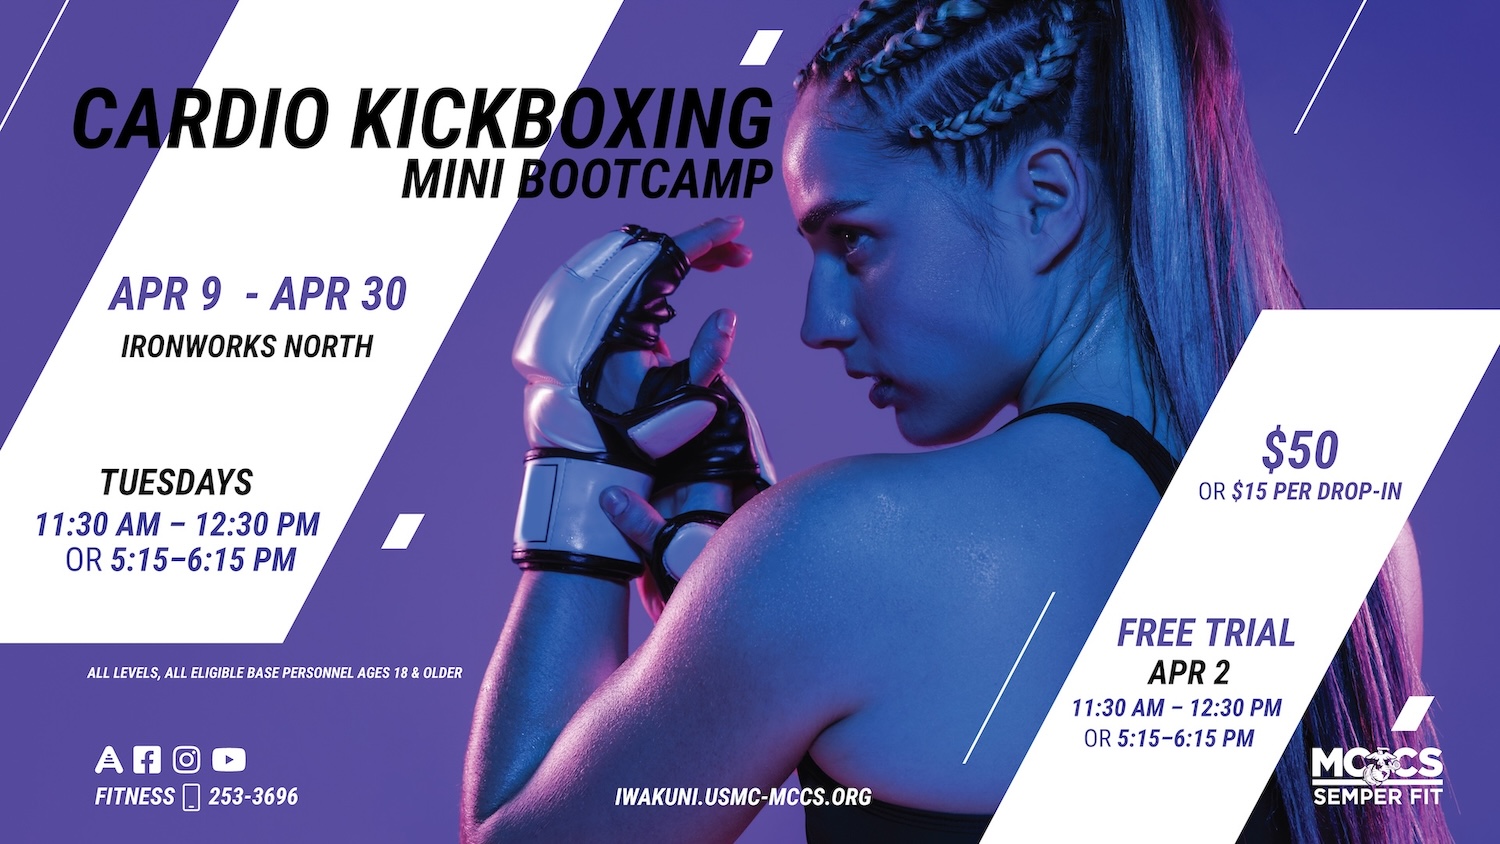 April Cardio Kickboxing Mini Bootcamp